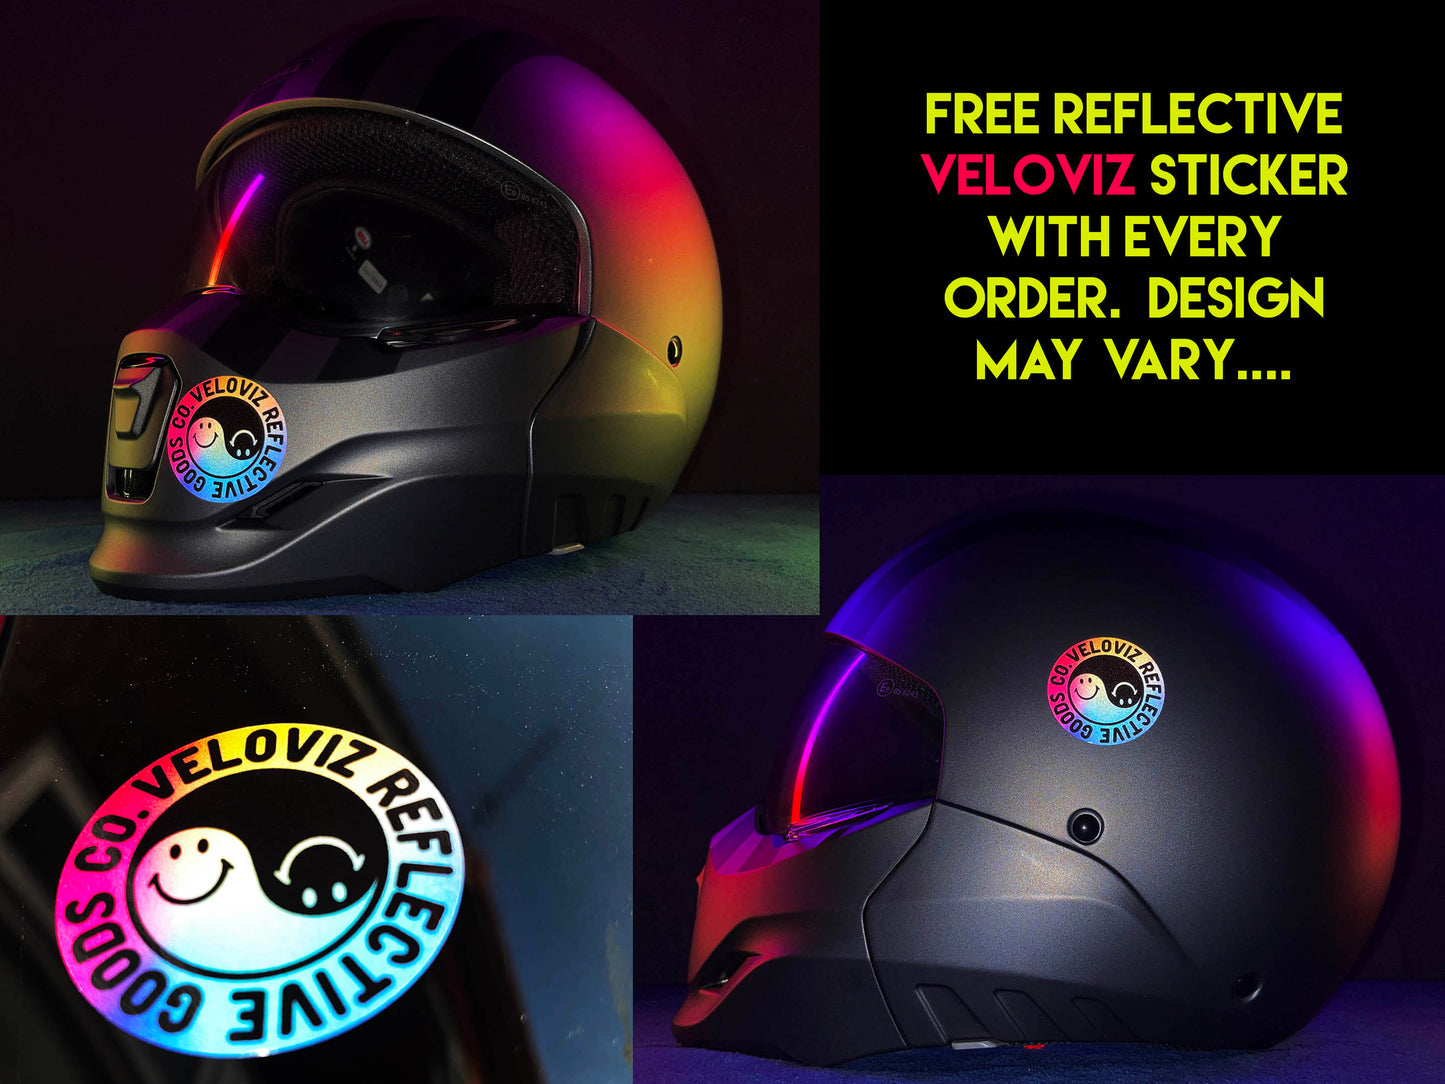 Valueviz Reflective Alien Head (Extra Large) Stickers